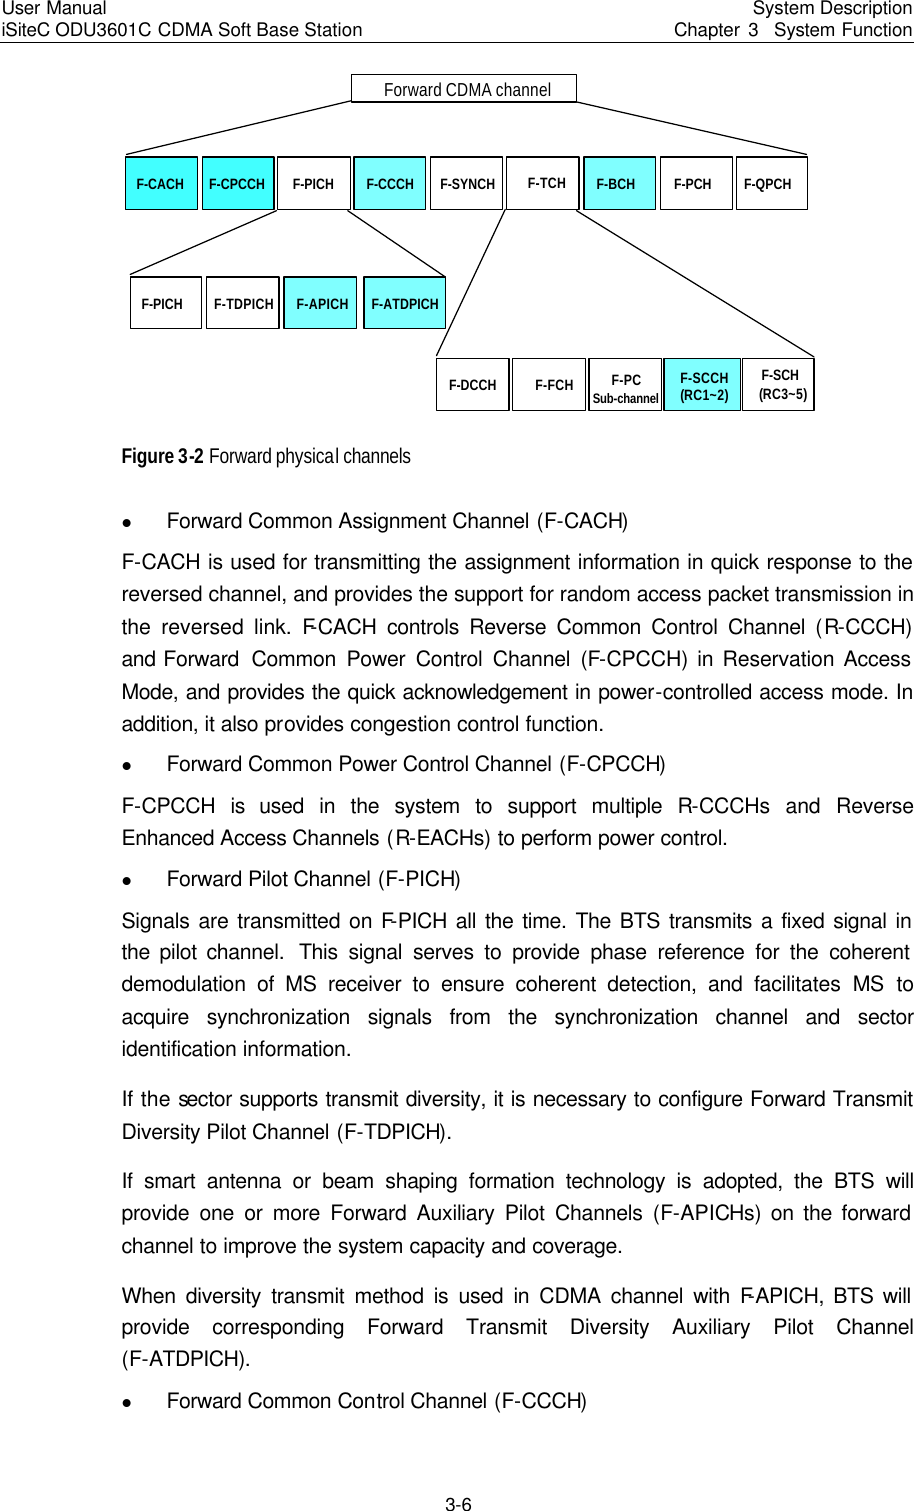 Page 36 of Huawei Technologies ODU3601C-800 CDMA Base Station User Manual 2